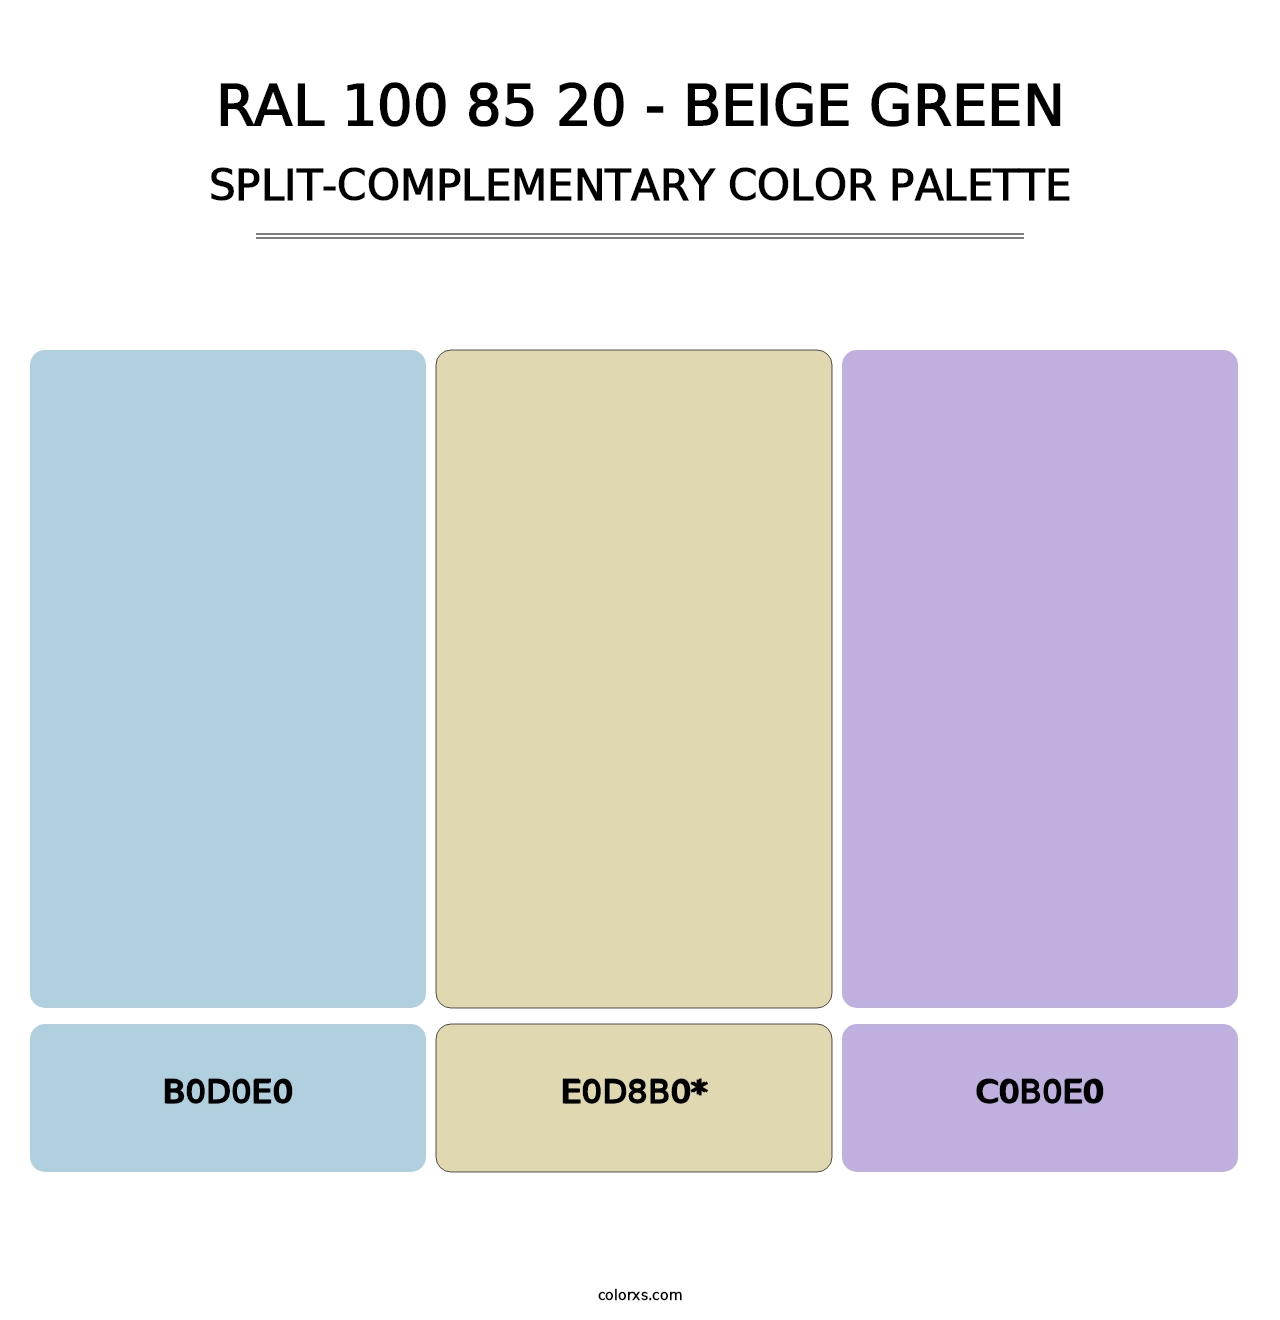 RAL 100 85 20 - Beige Green - Split-Complementary Color Palette